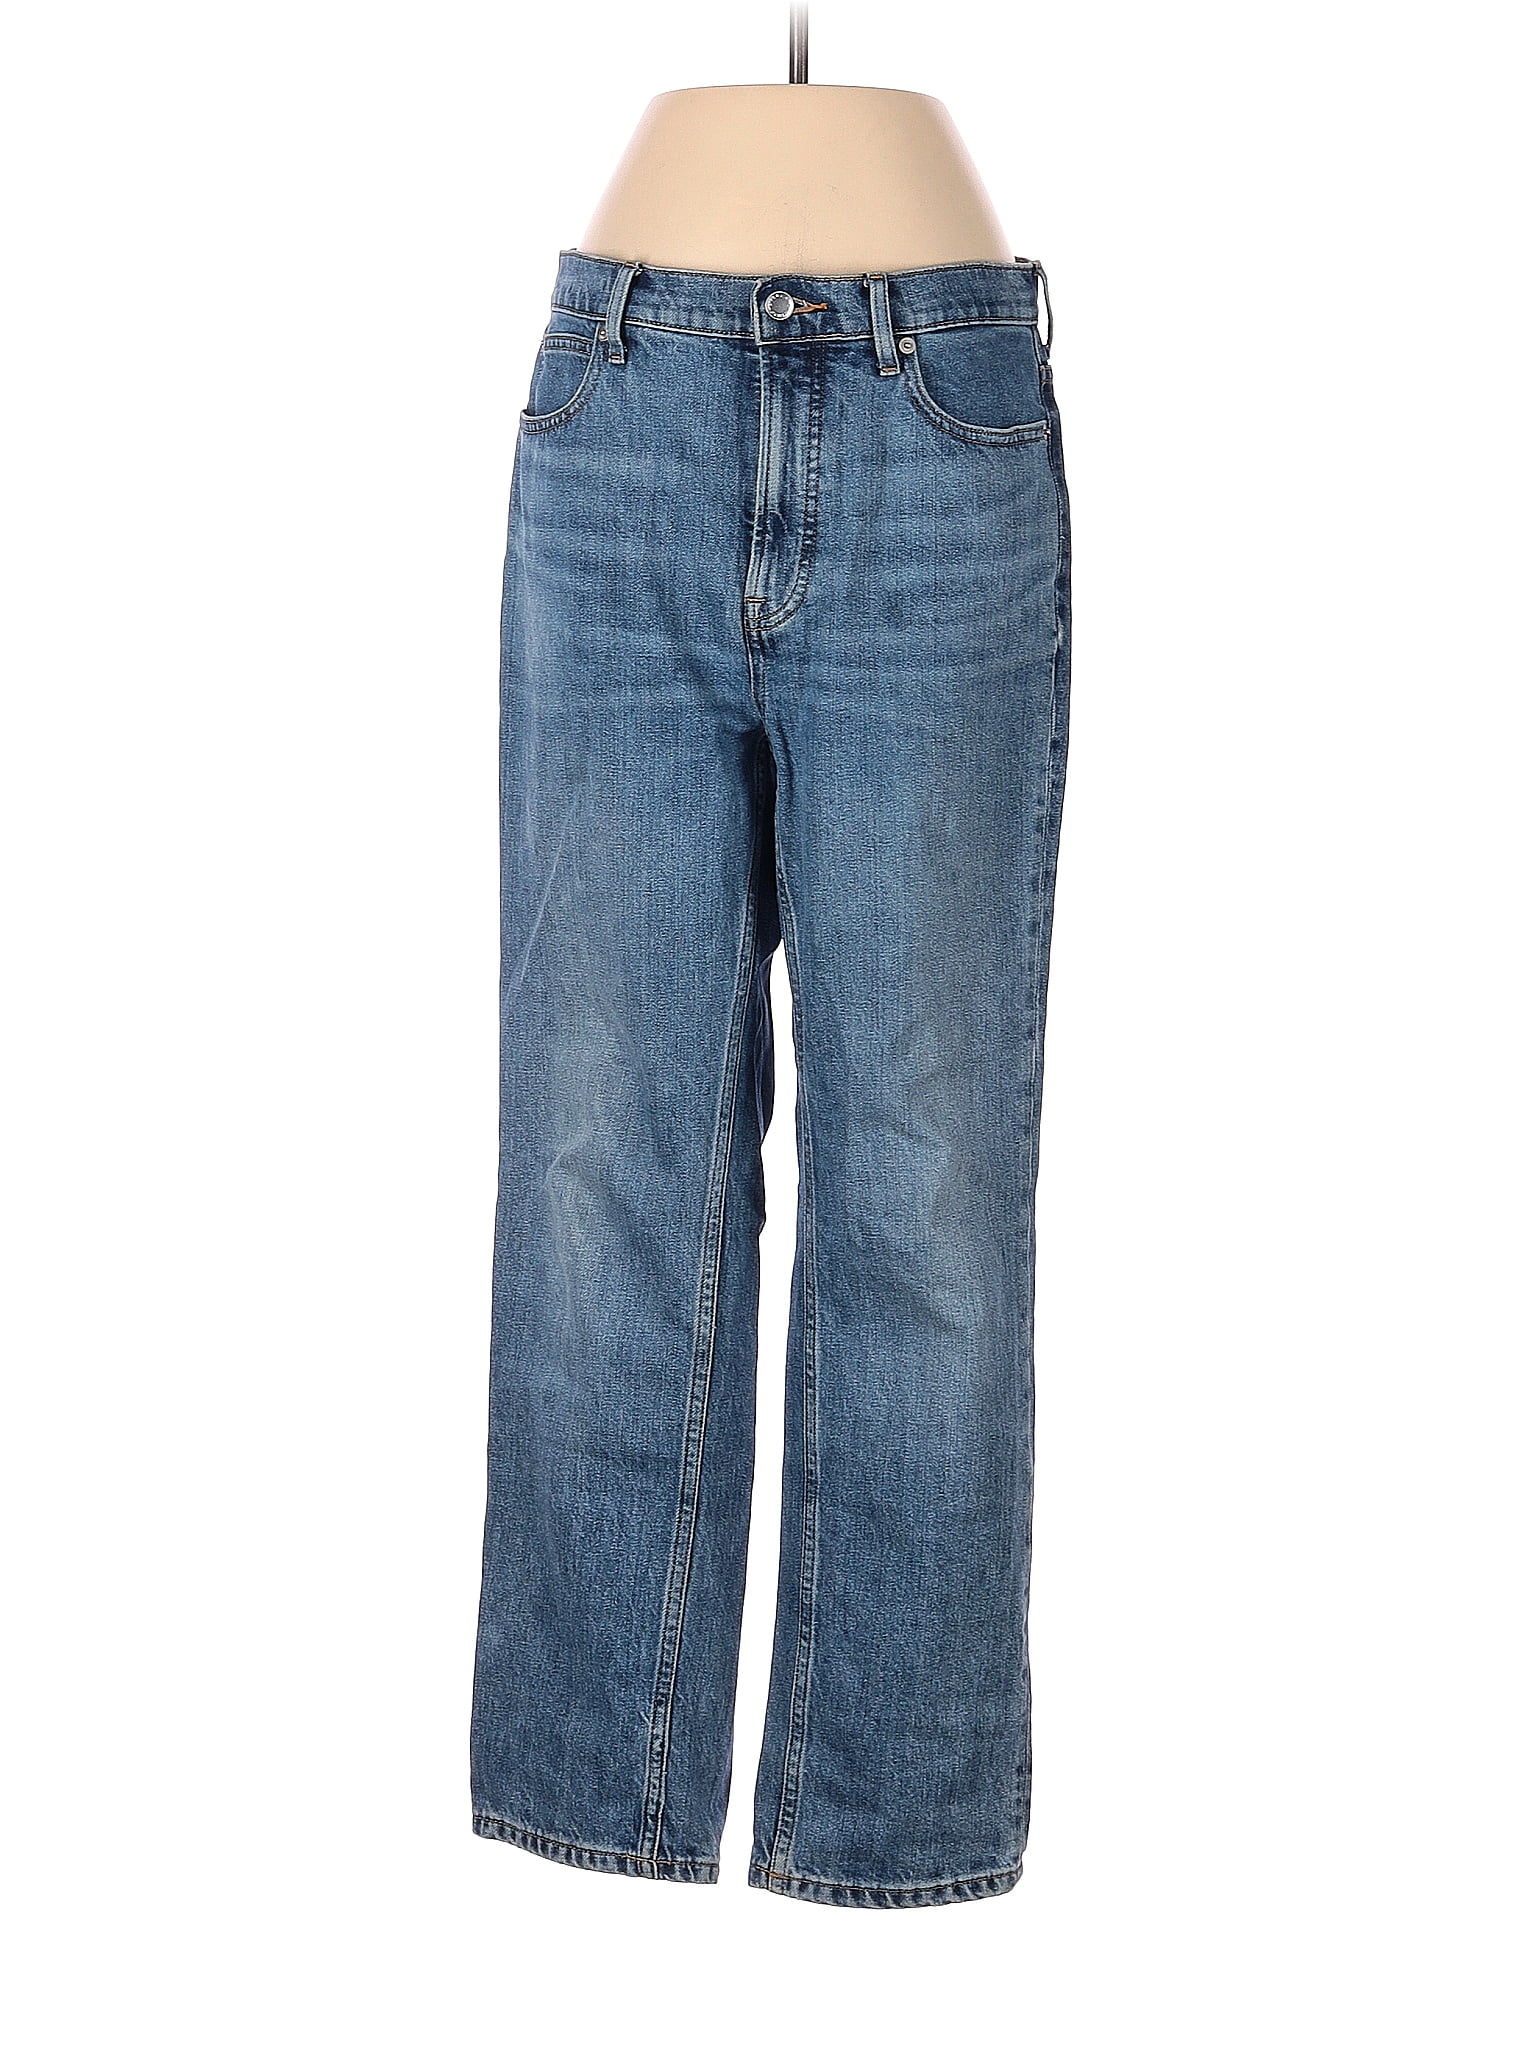 Everlane Solid Blue Jeans 27 Waist - 59% off | thredUP